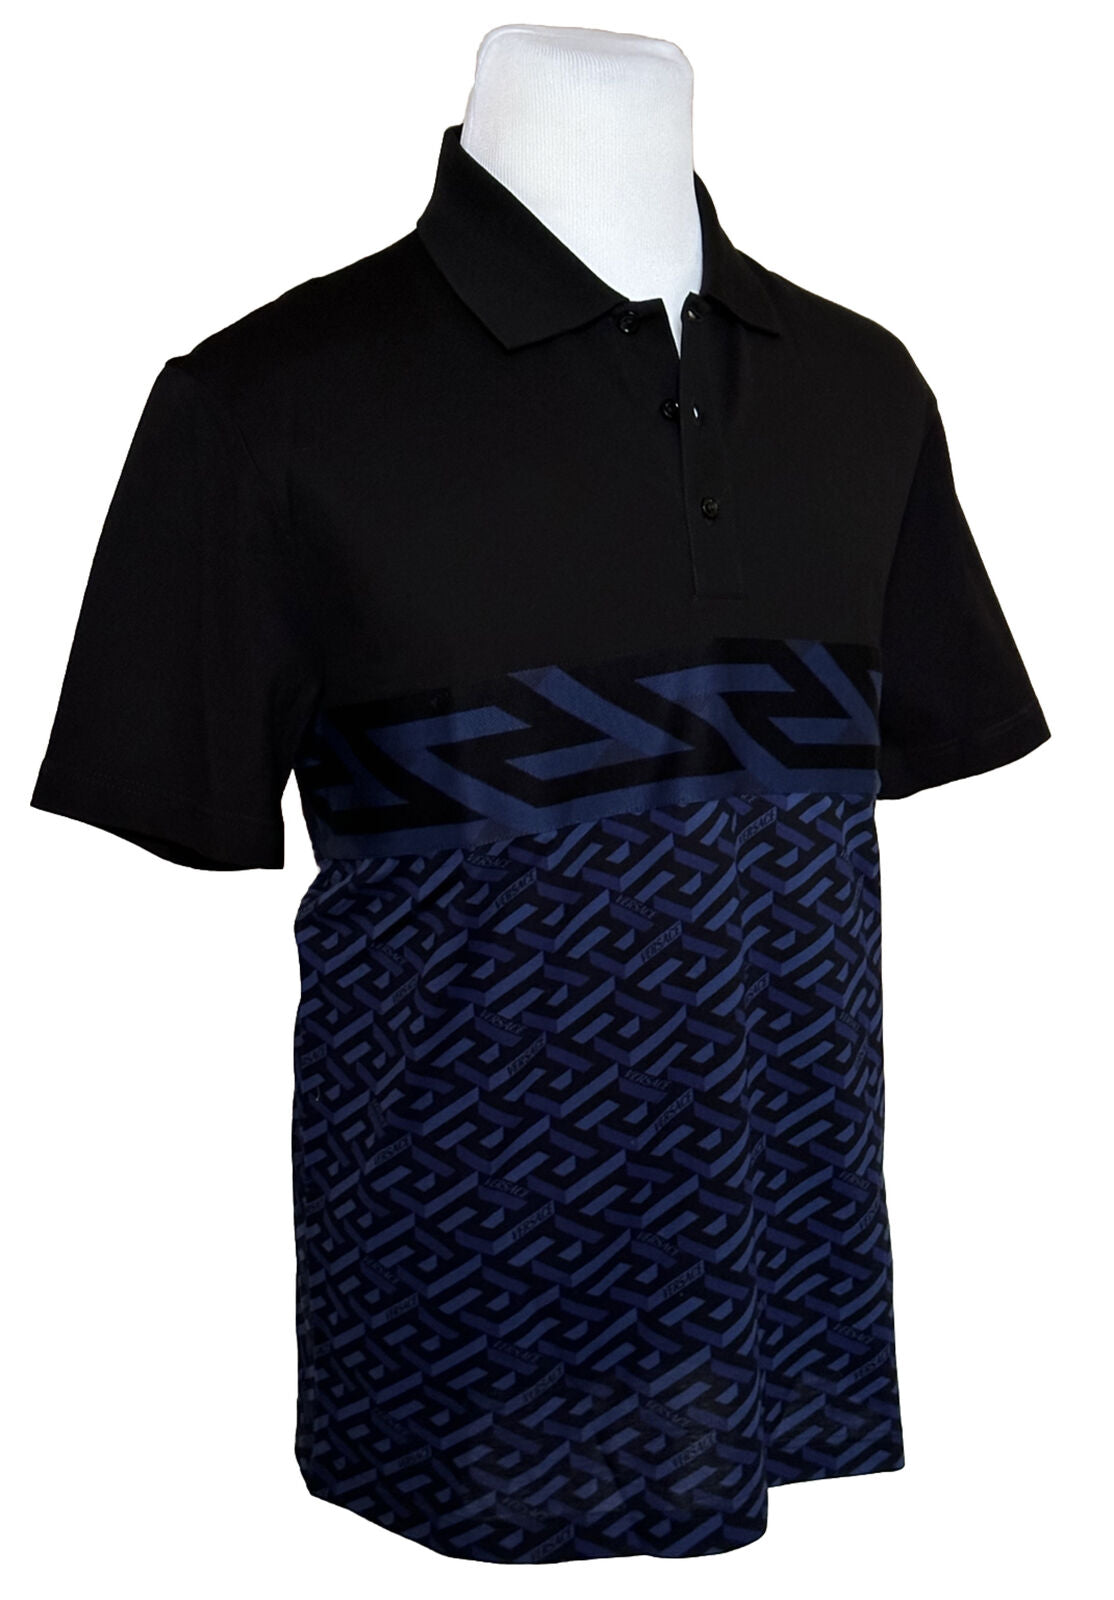 NWT $900 Versace Piquet Greca Signature Blue/Black Polo Shirt 2XL 1006468 Italy